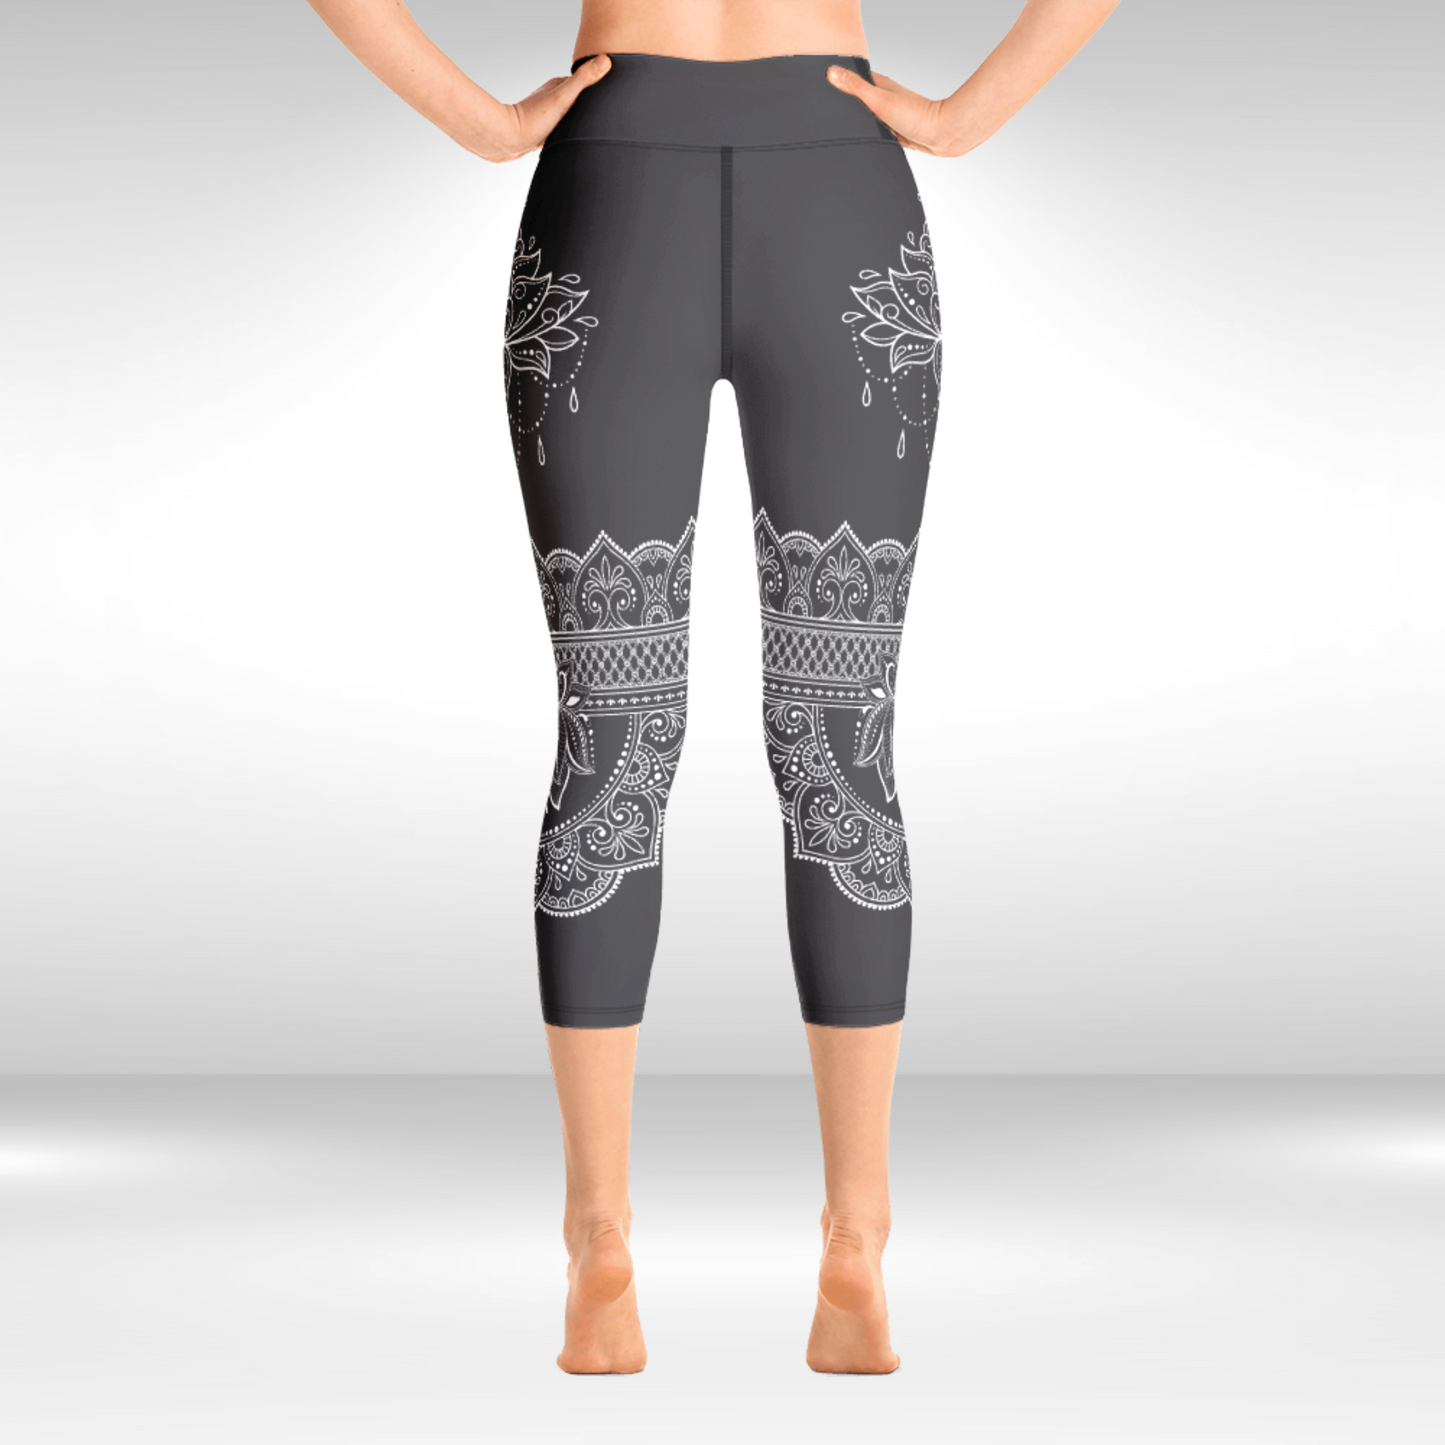 Women Yoga Legging - Grey and White Lotus Print